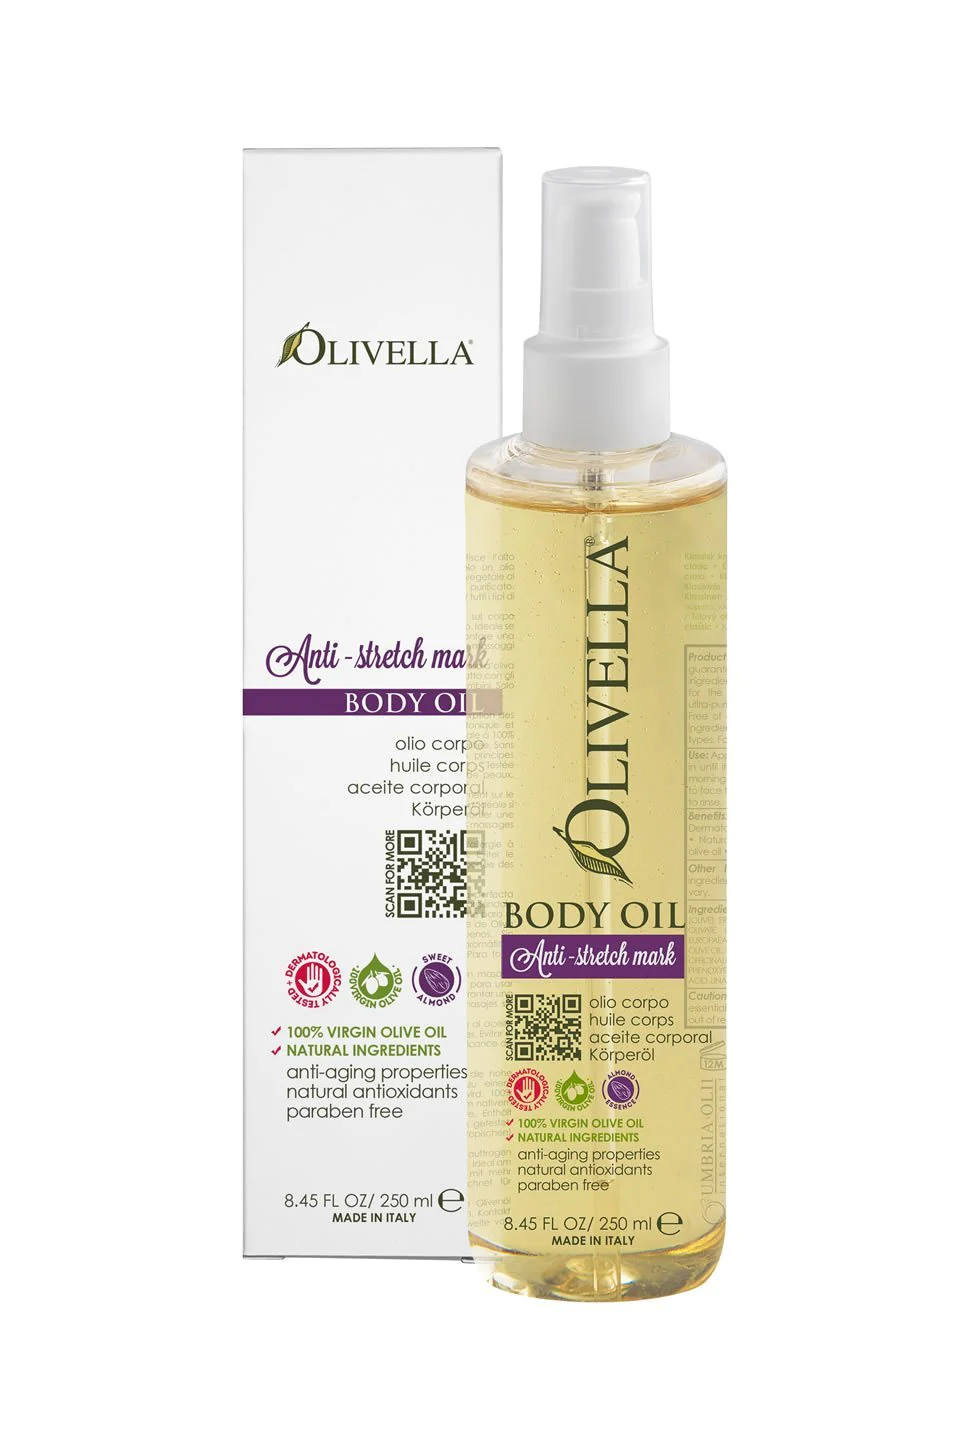 Olivella Body Oil - Anti-Stretch Mark